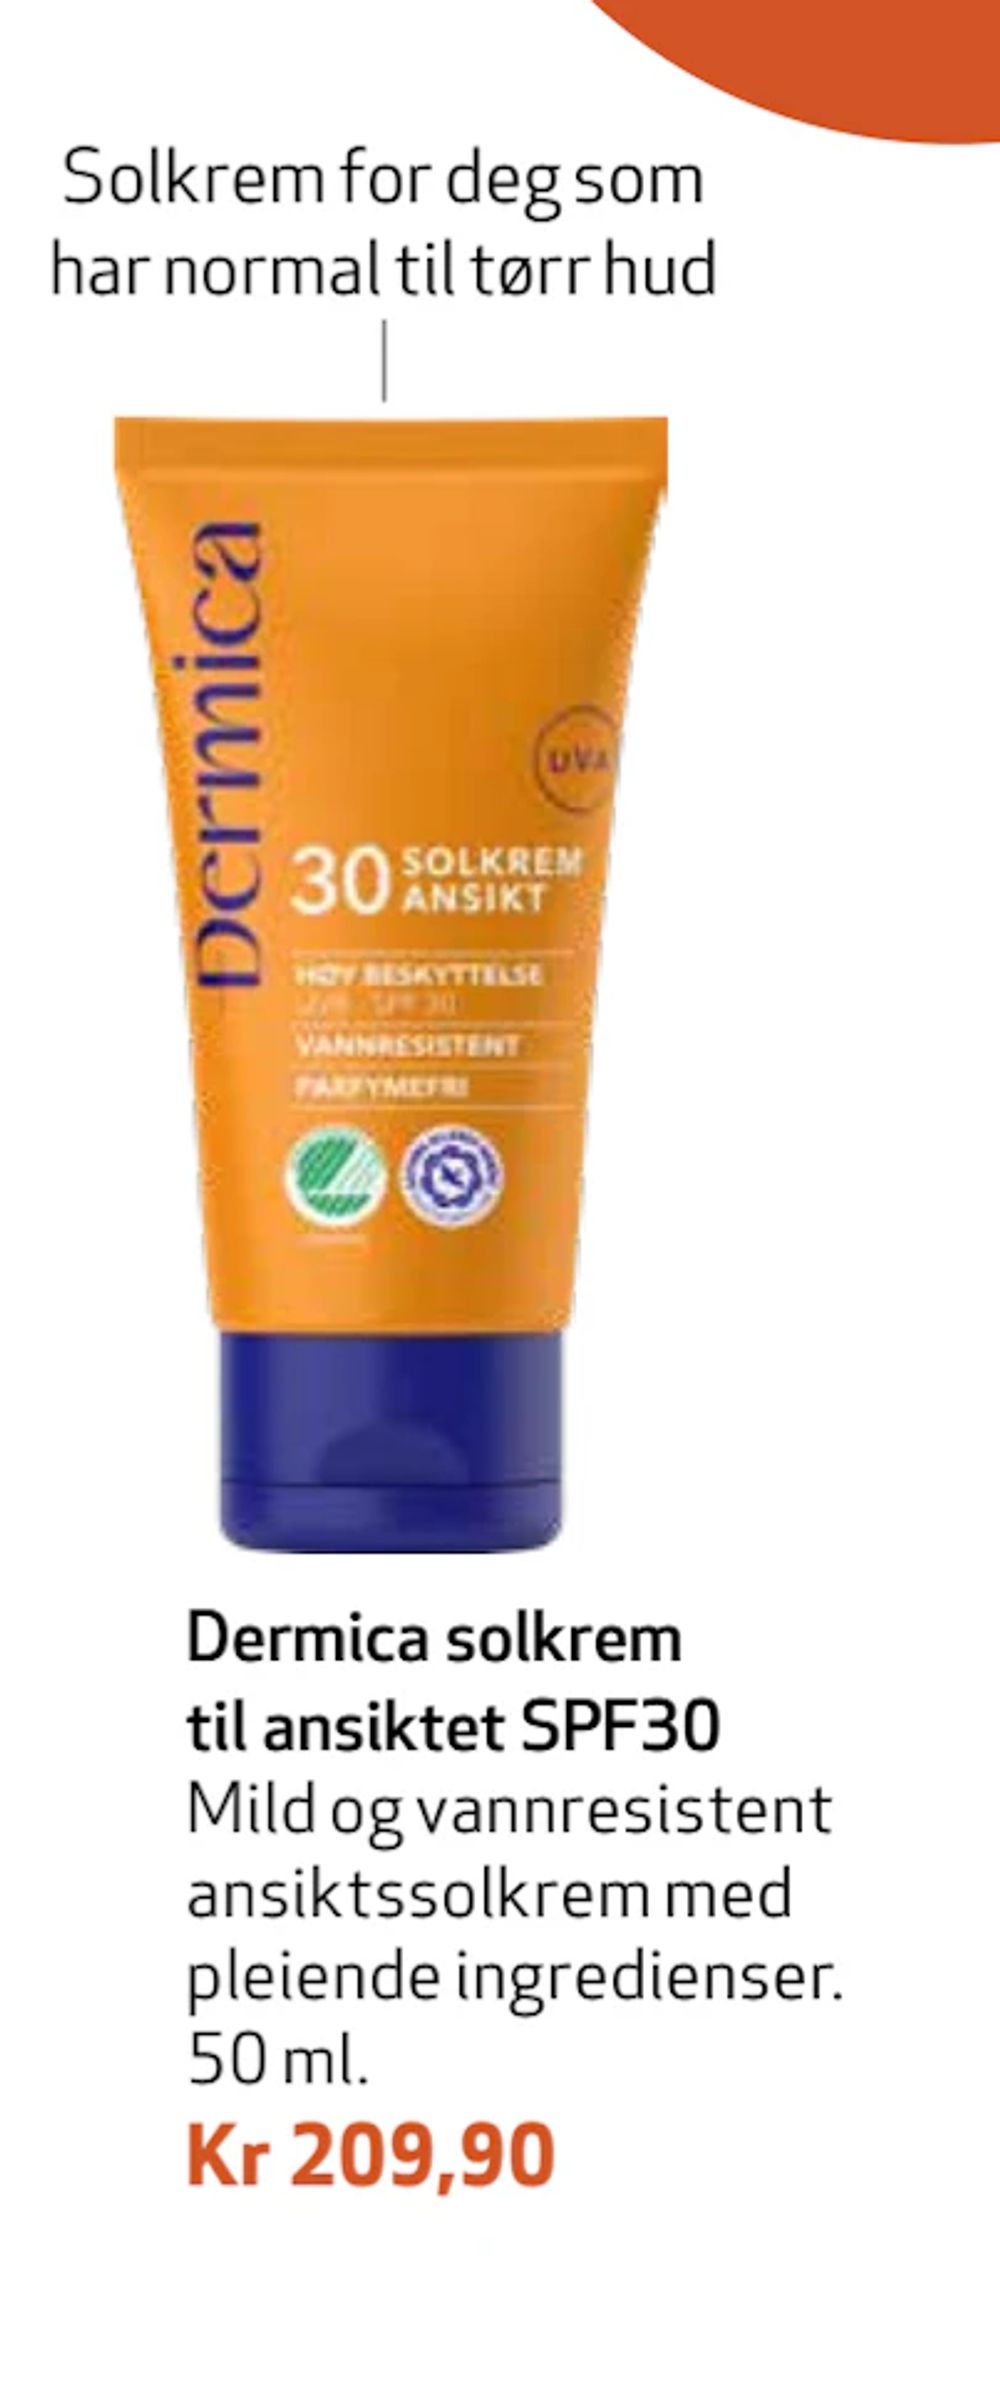 Tilbud på Dermica solkrem til ansiktet SPF30 fra Apotek 1 til 209,90 kr